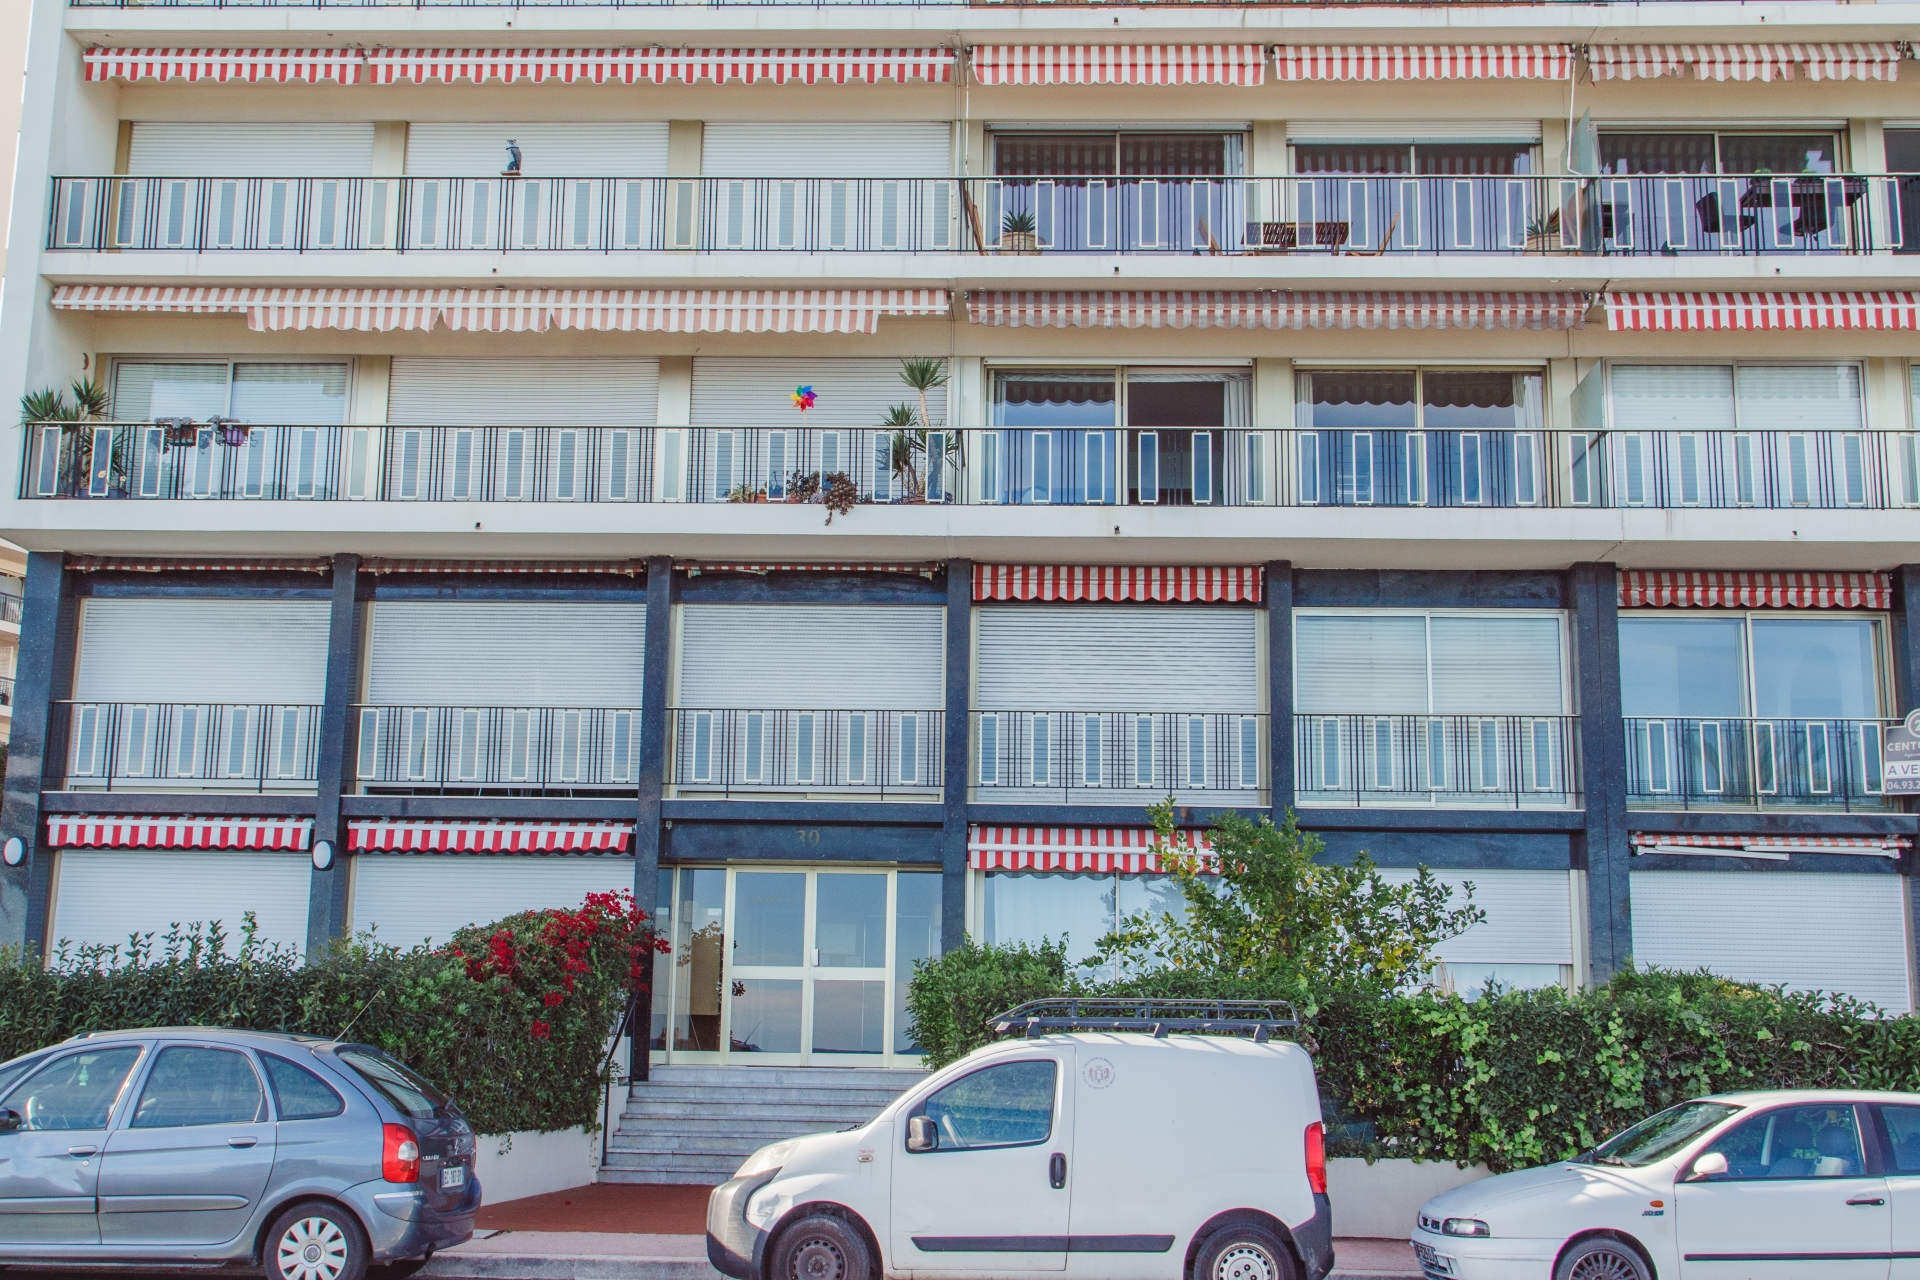 Dotta Appartement de 3 pieces a vendre - ALOES ET BOUGAINVILLIERS - Roquebrune-Cap-Martin - Roquebrune-Cap-Martin - img1114